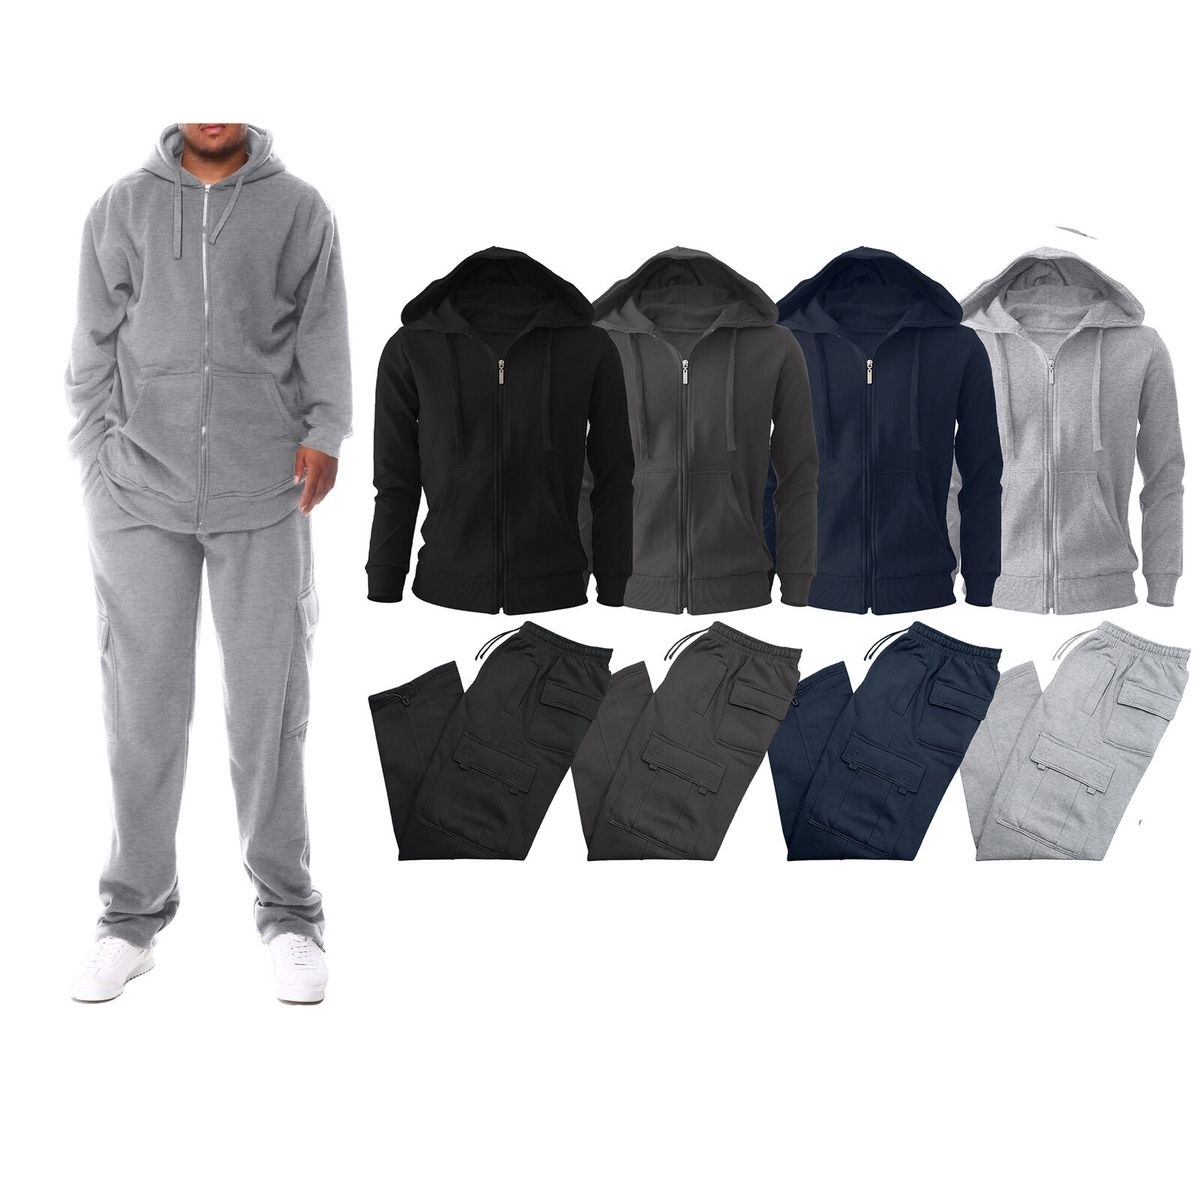 Men's Big & Tall Winter Warm Athletic Active Cozy Fleece Lined Multi-Pocket Full Zip Up Cargo Tracksuit - Black, Small